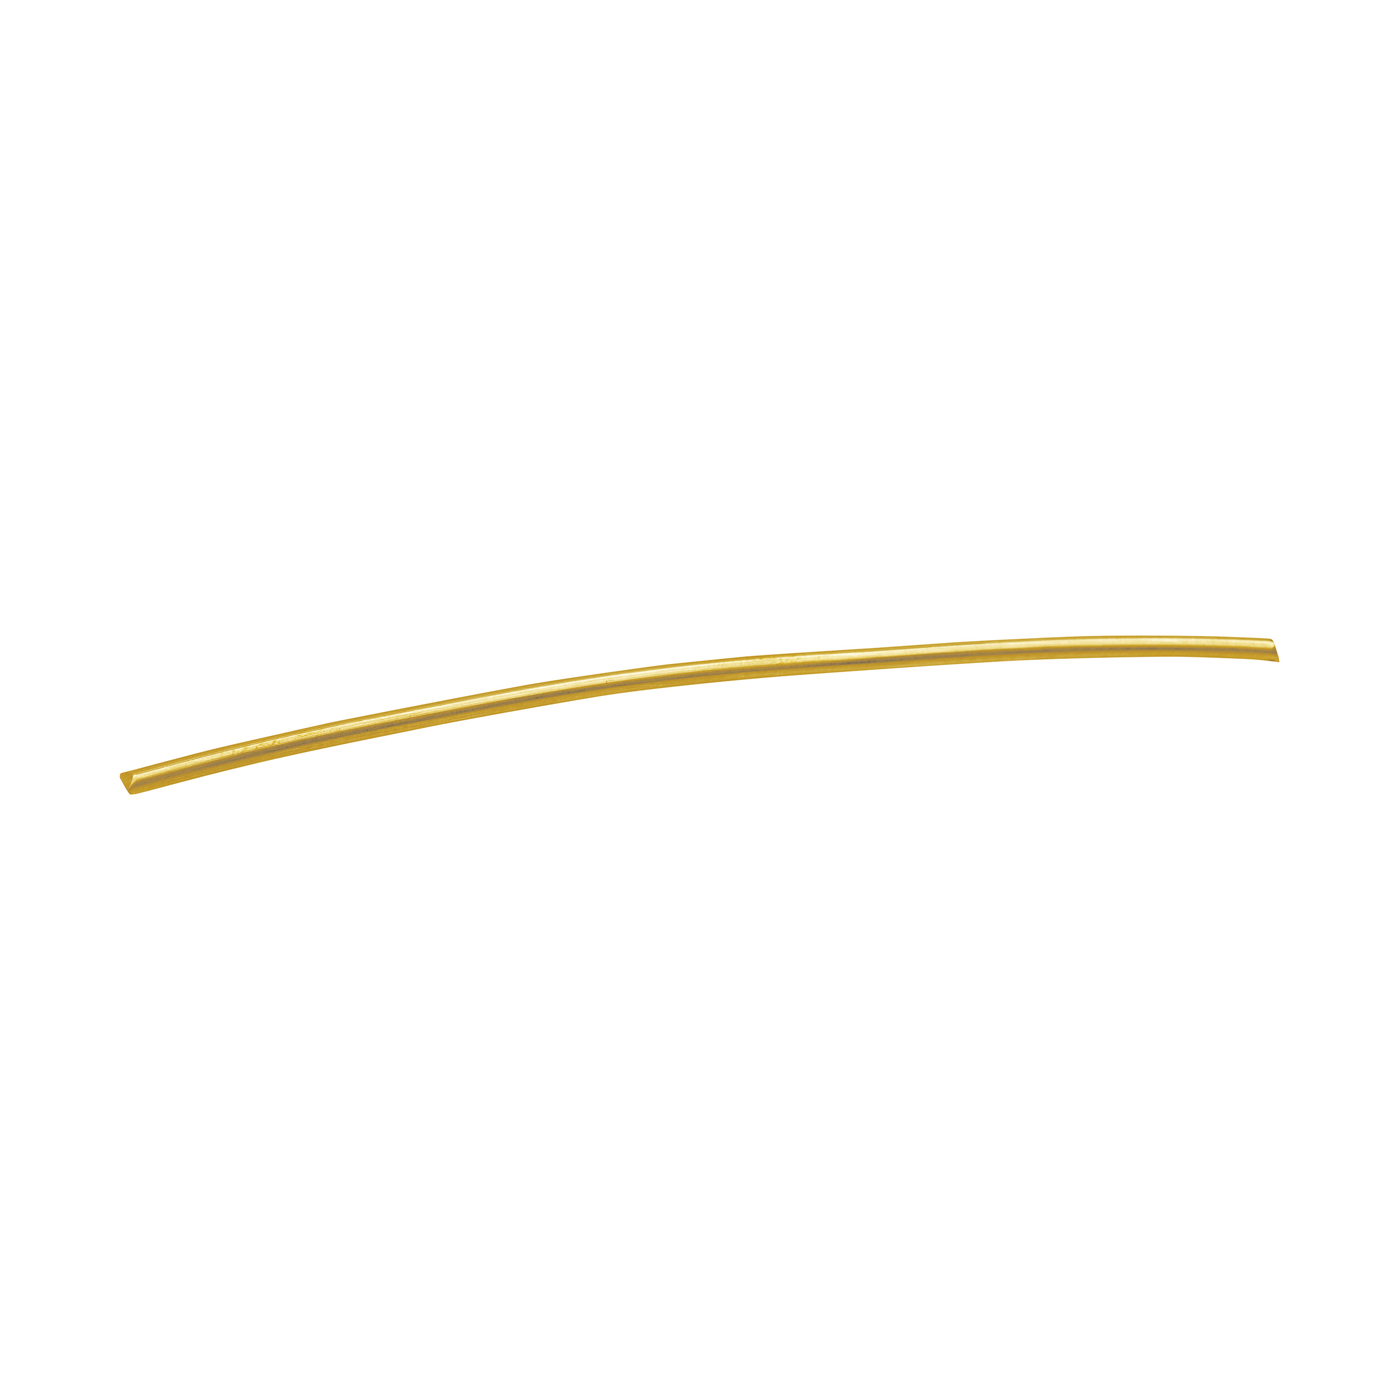 Round Wire, 750G/125 Deep Yellow, ø 3 mm, Length 8 cm - 1 piece